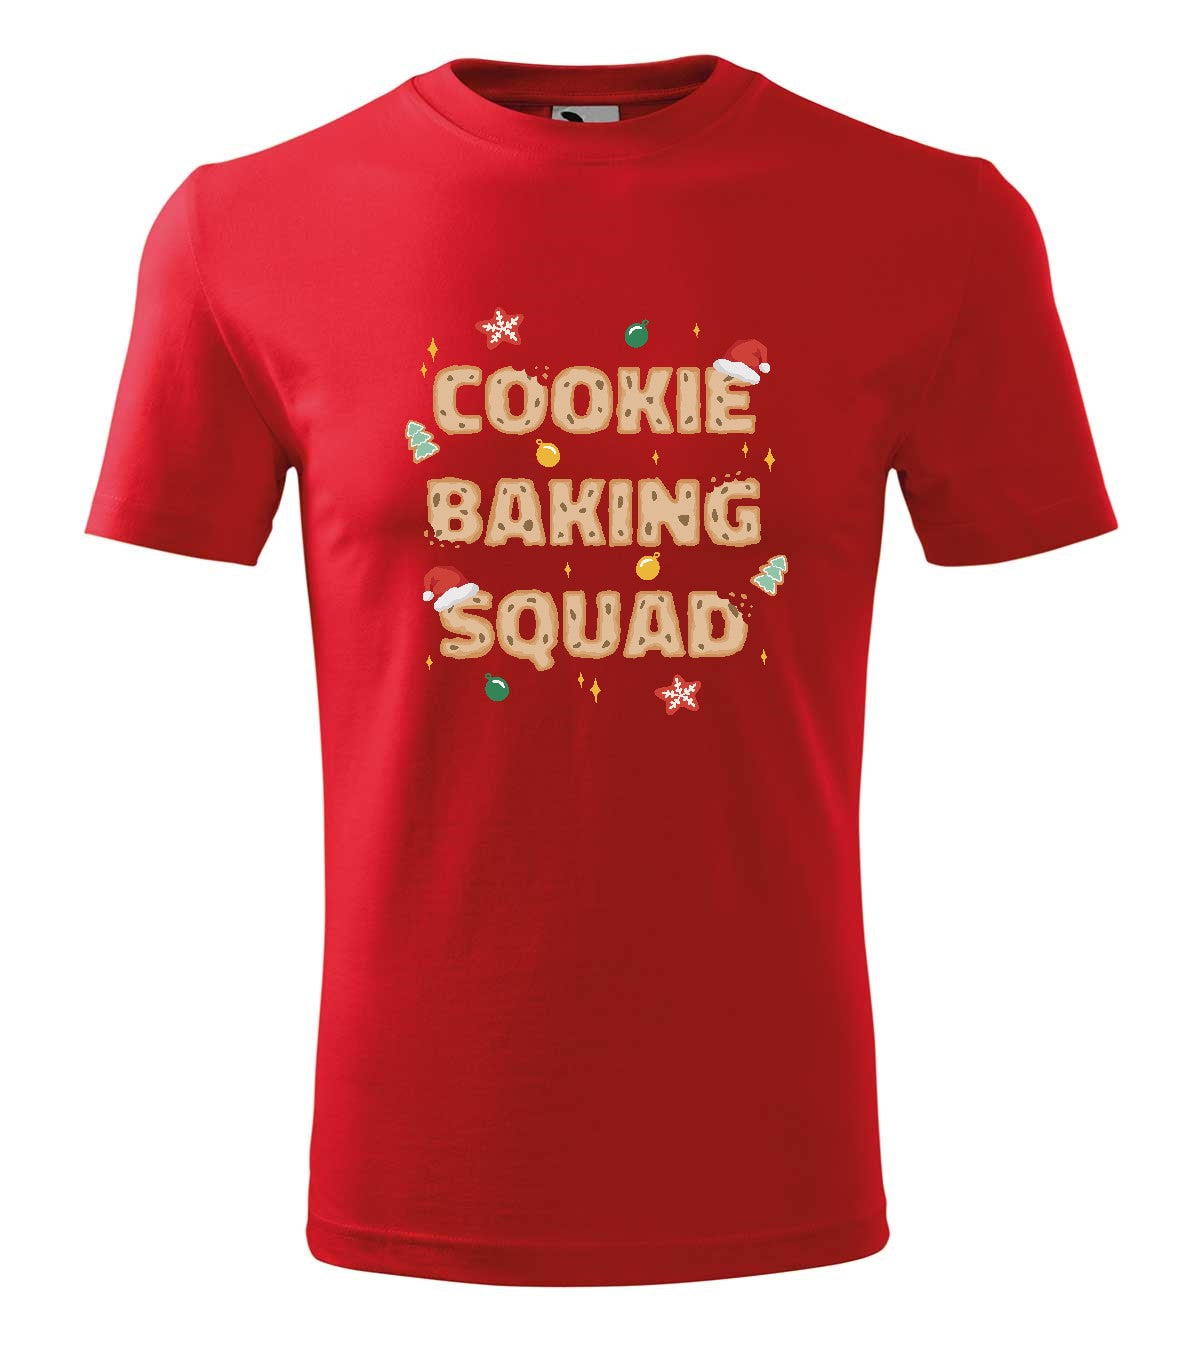 Cookie Baking Squad gyerek technikai póló